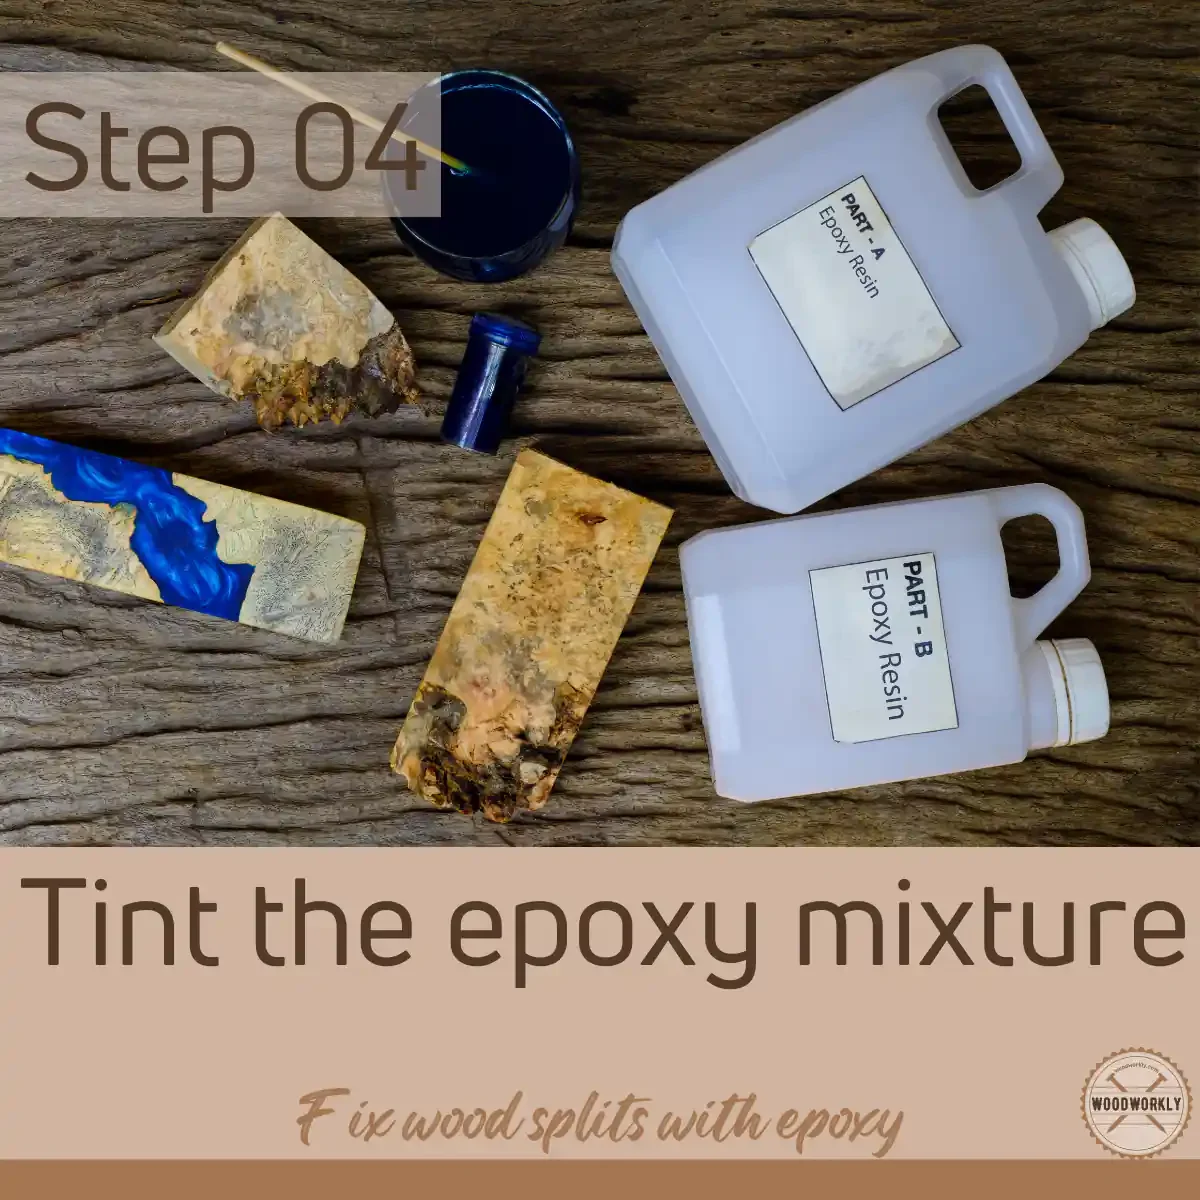 Tint the epoxy mixture before fixing wood splits